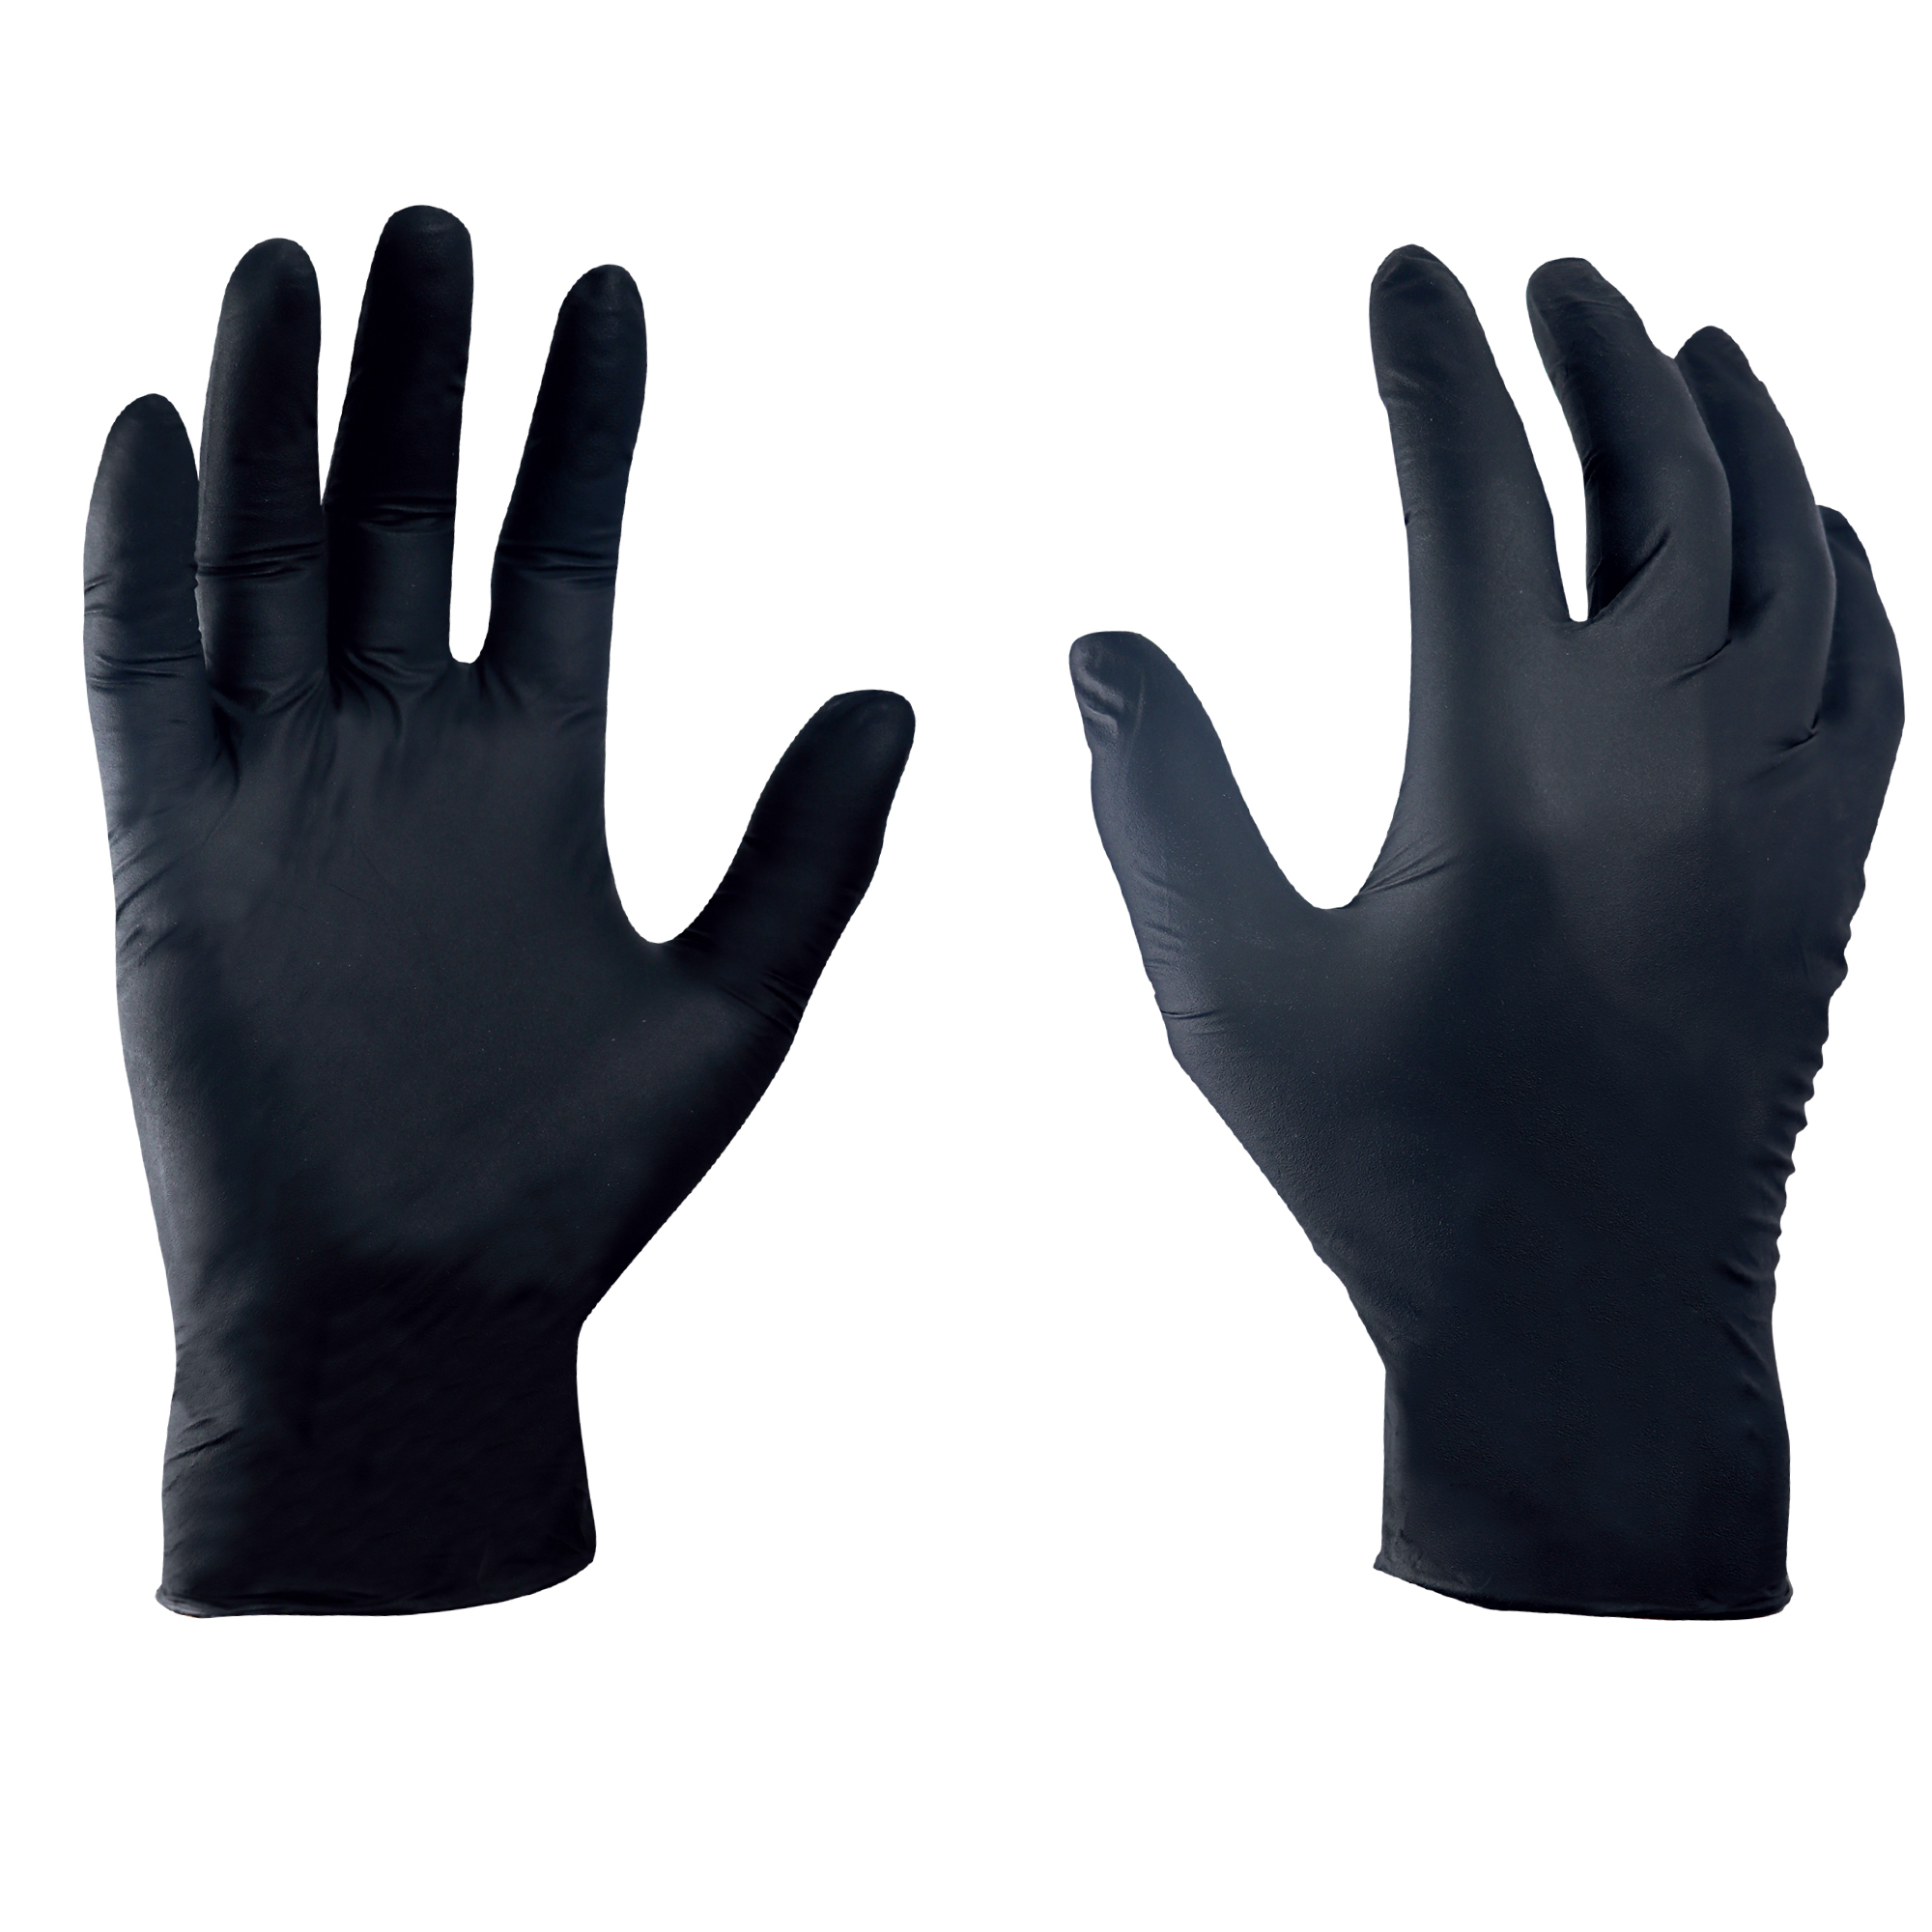 General Electric, 4mil Nitrile Black large Gloves100pk, Size L, Color Black, Included (qty.) 100 Model GG601L